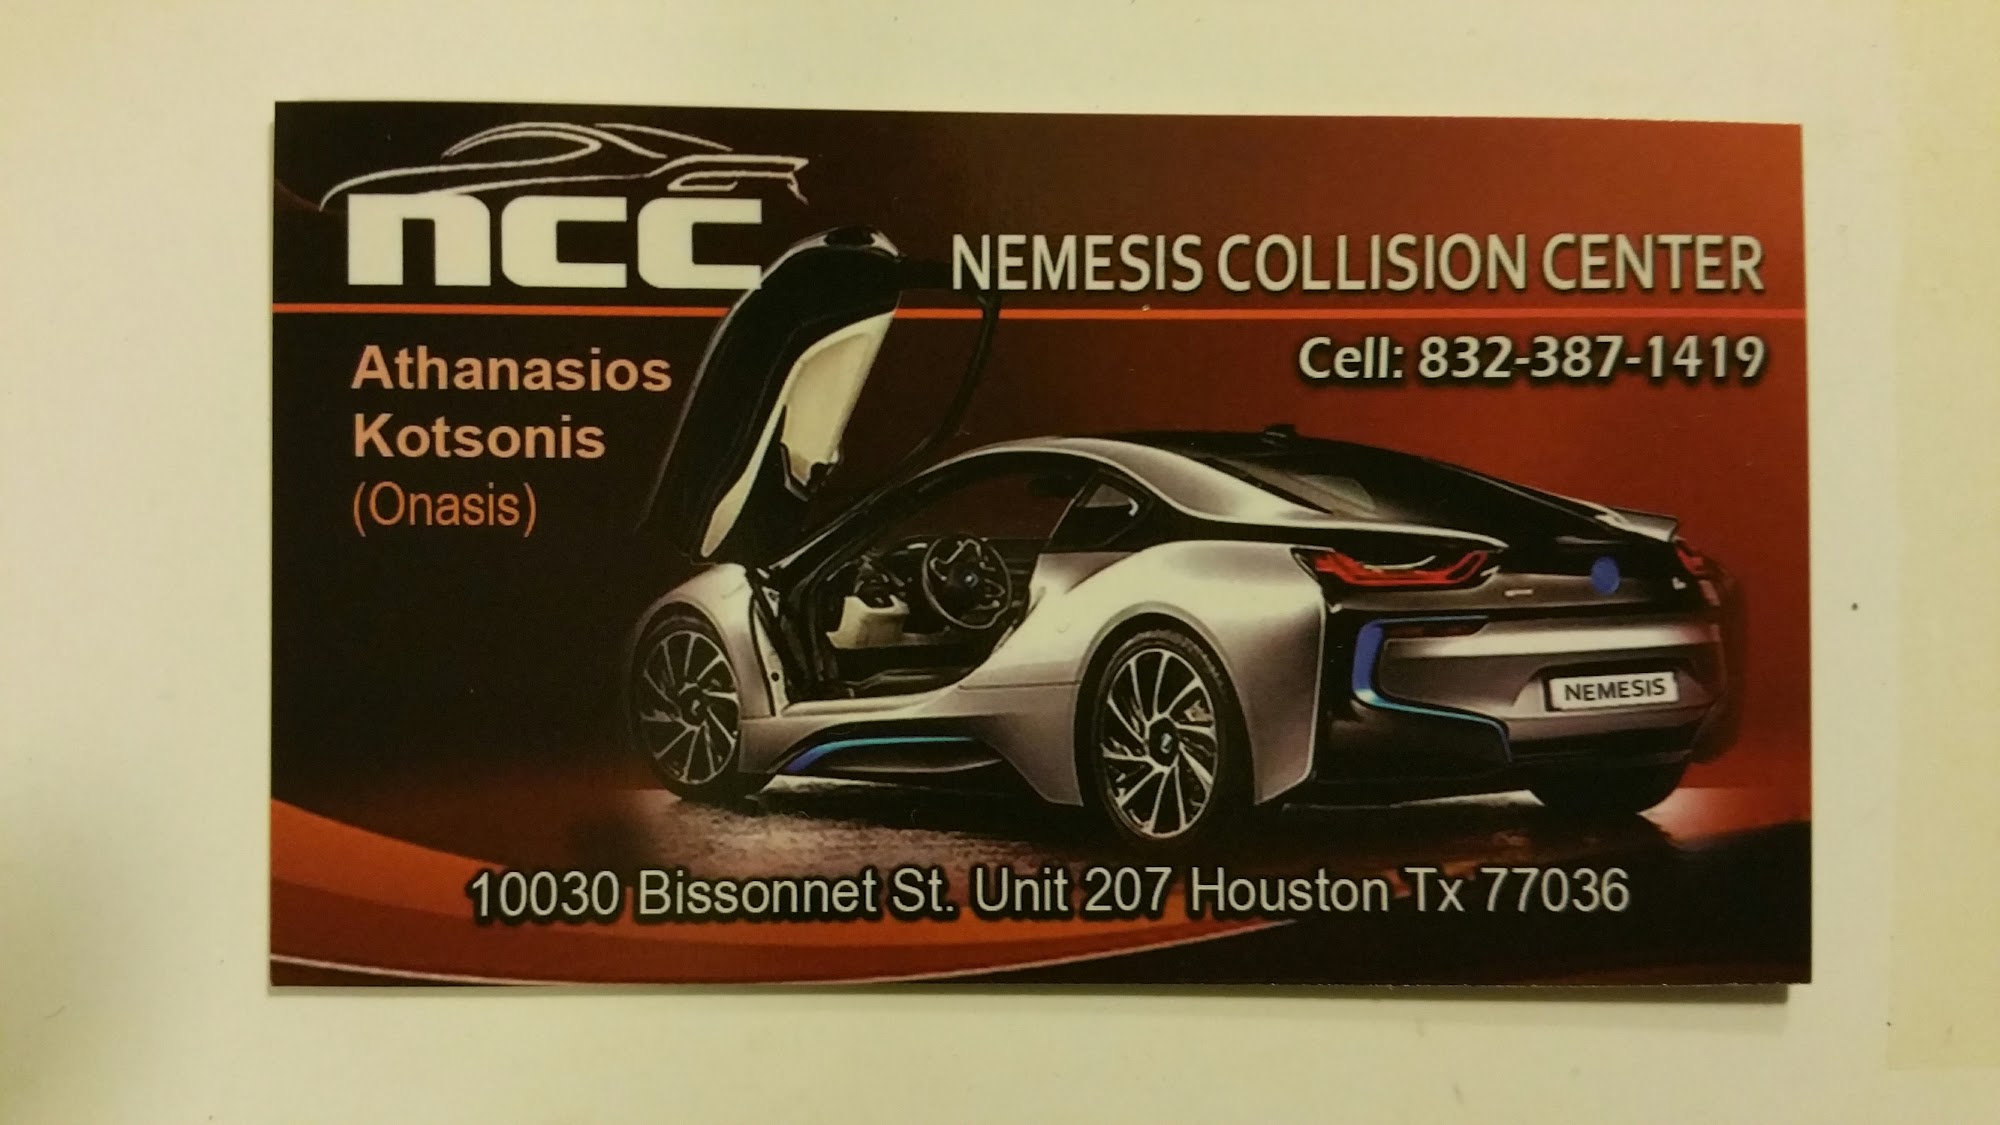 Nemesis Collision Center LLC